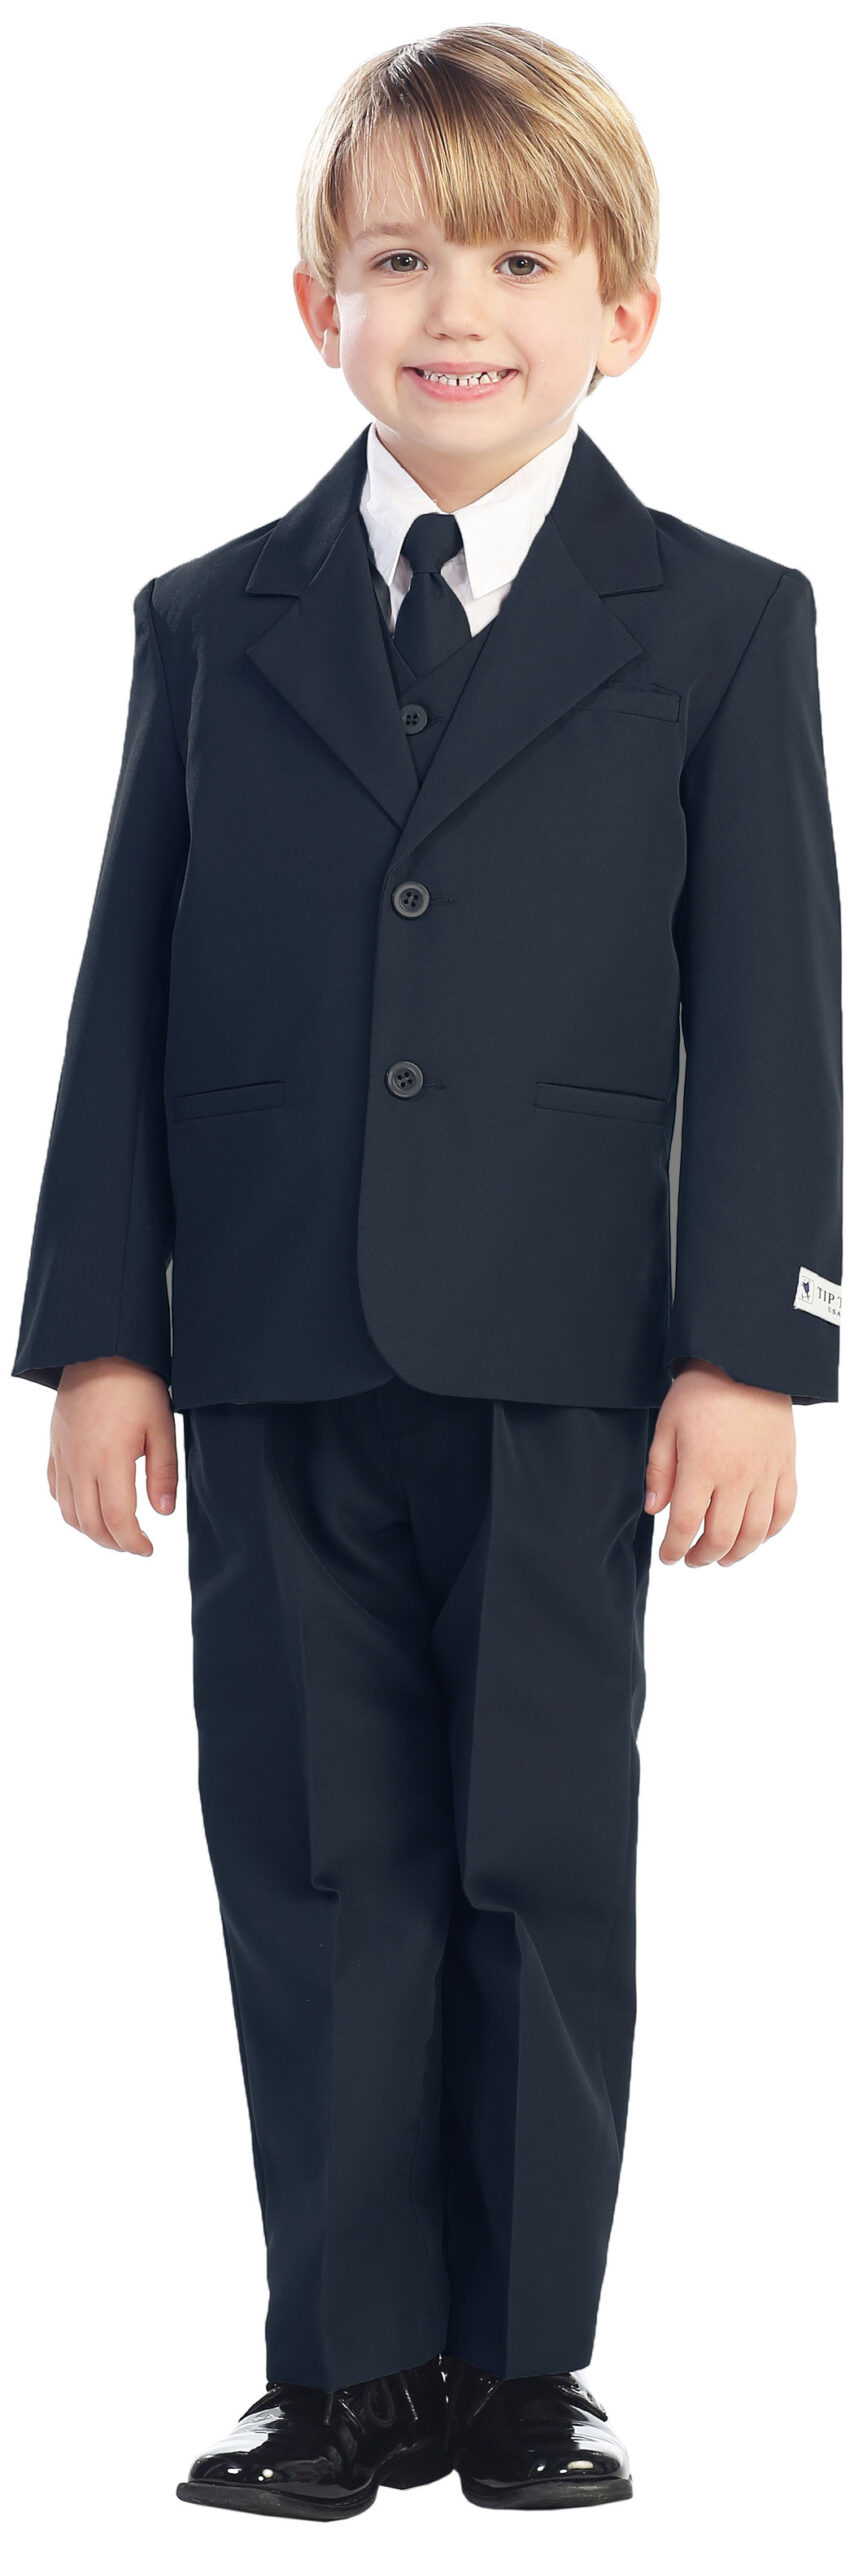 Avery Hill 5-Piece Boy's 2-Button Dress Suit Full-Back Vest - Navy Blue M (6 - 12 Months)